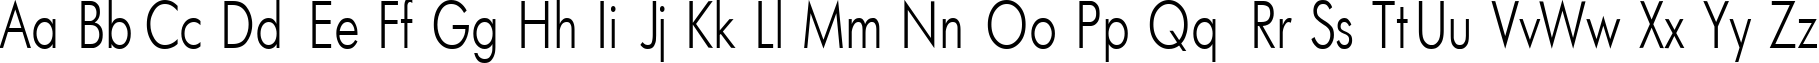 Пример написания английского алфавита шрифтом Futura Narrow